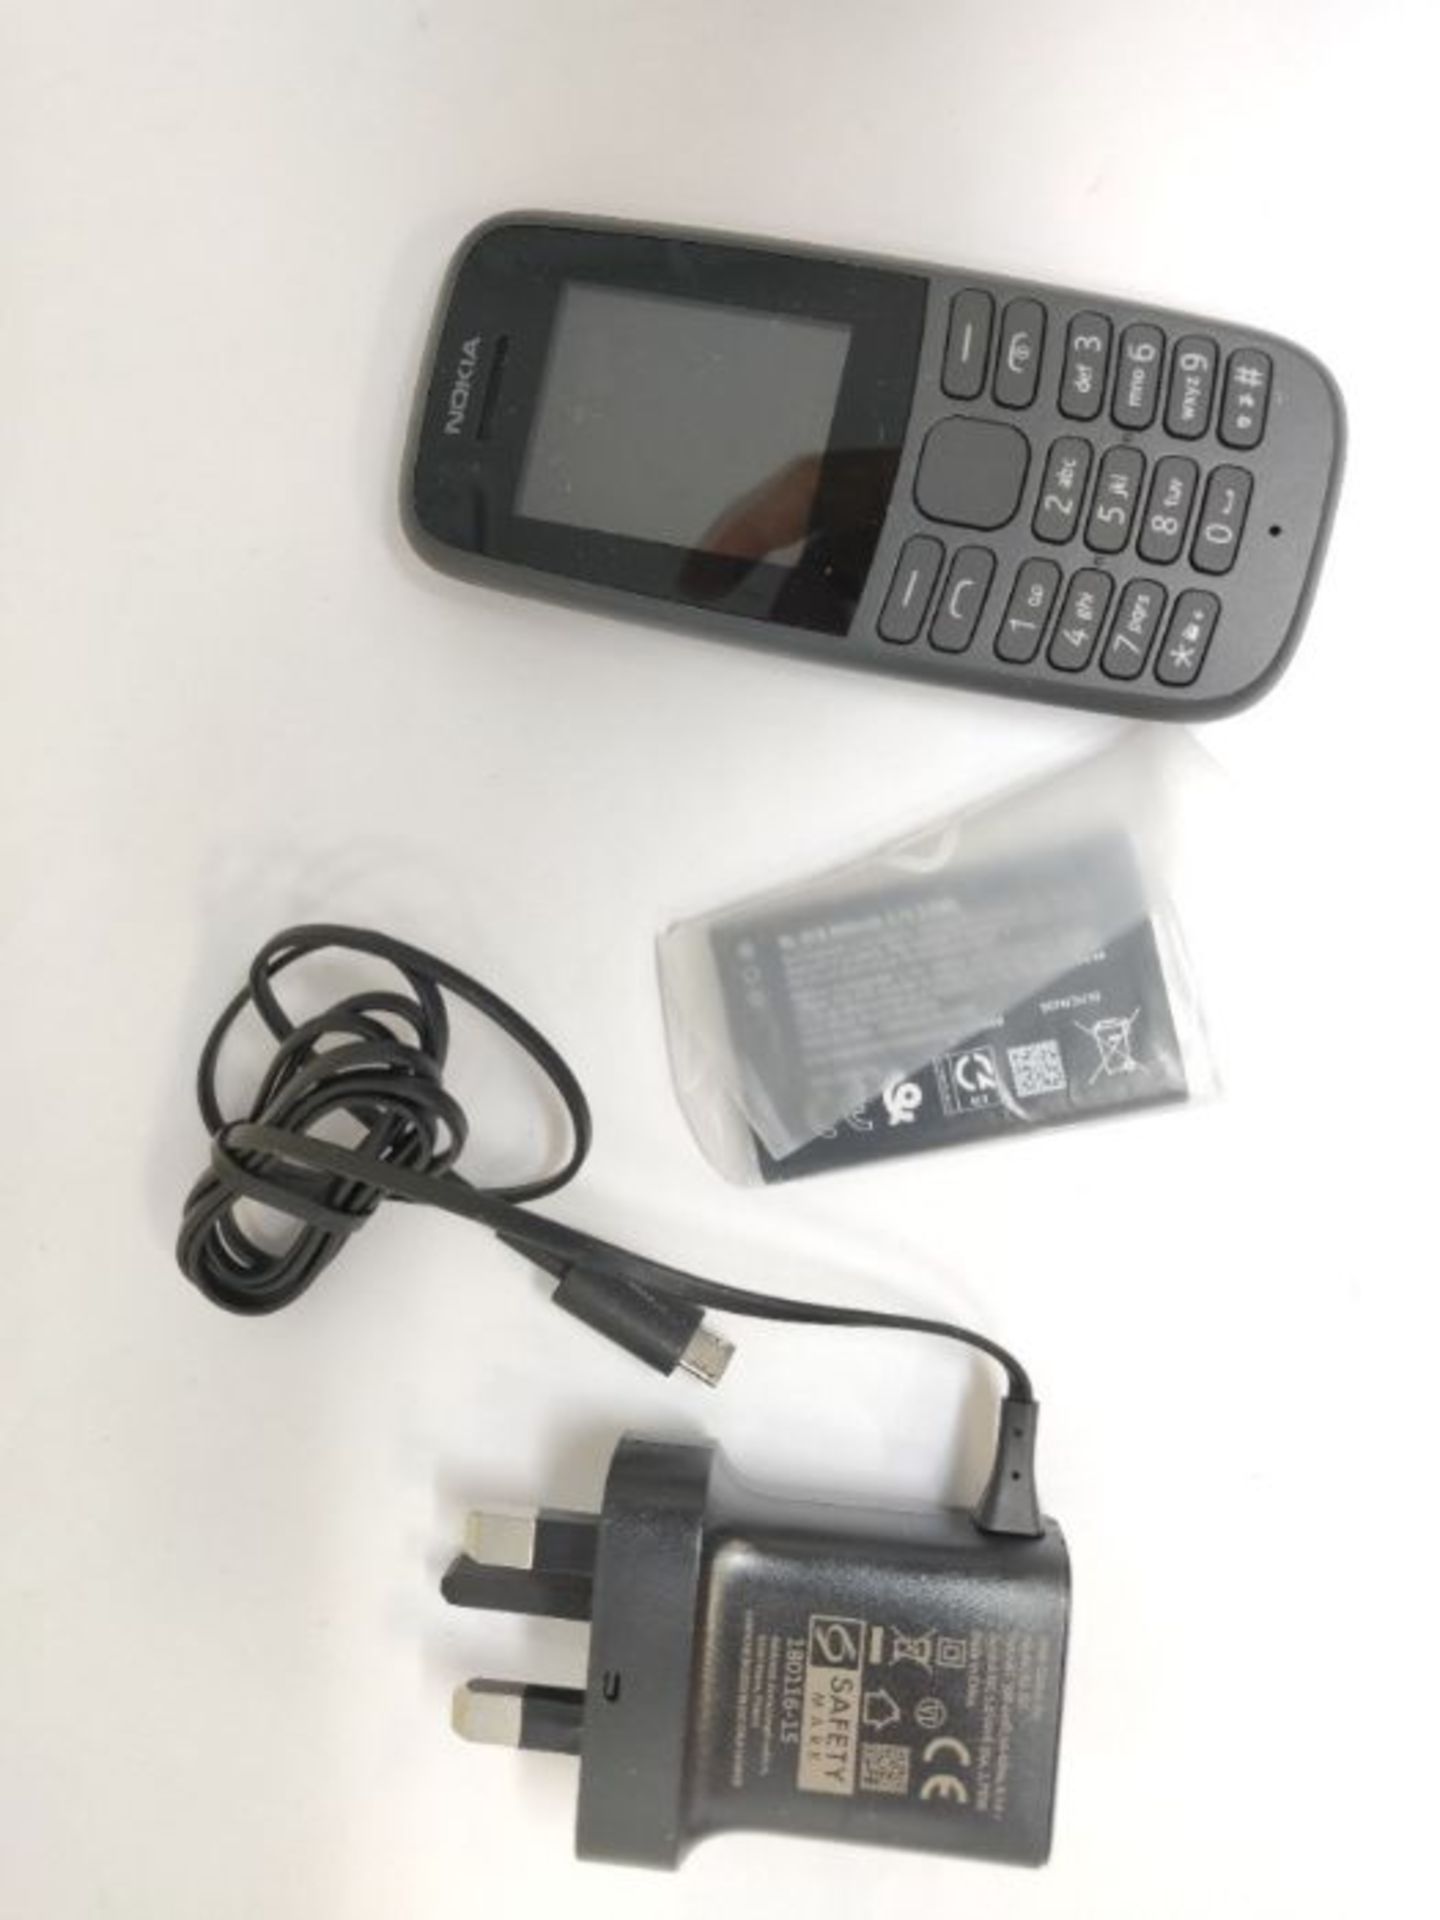 Nokia 105 (2019 edition) 1.77 Inch UK SIM Free Feature Phone (Single SIM)  Black - Image 3 of 3